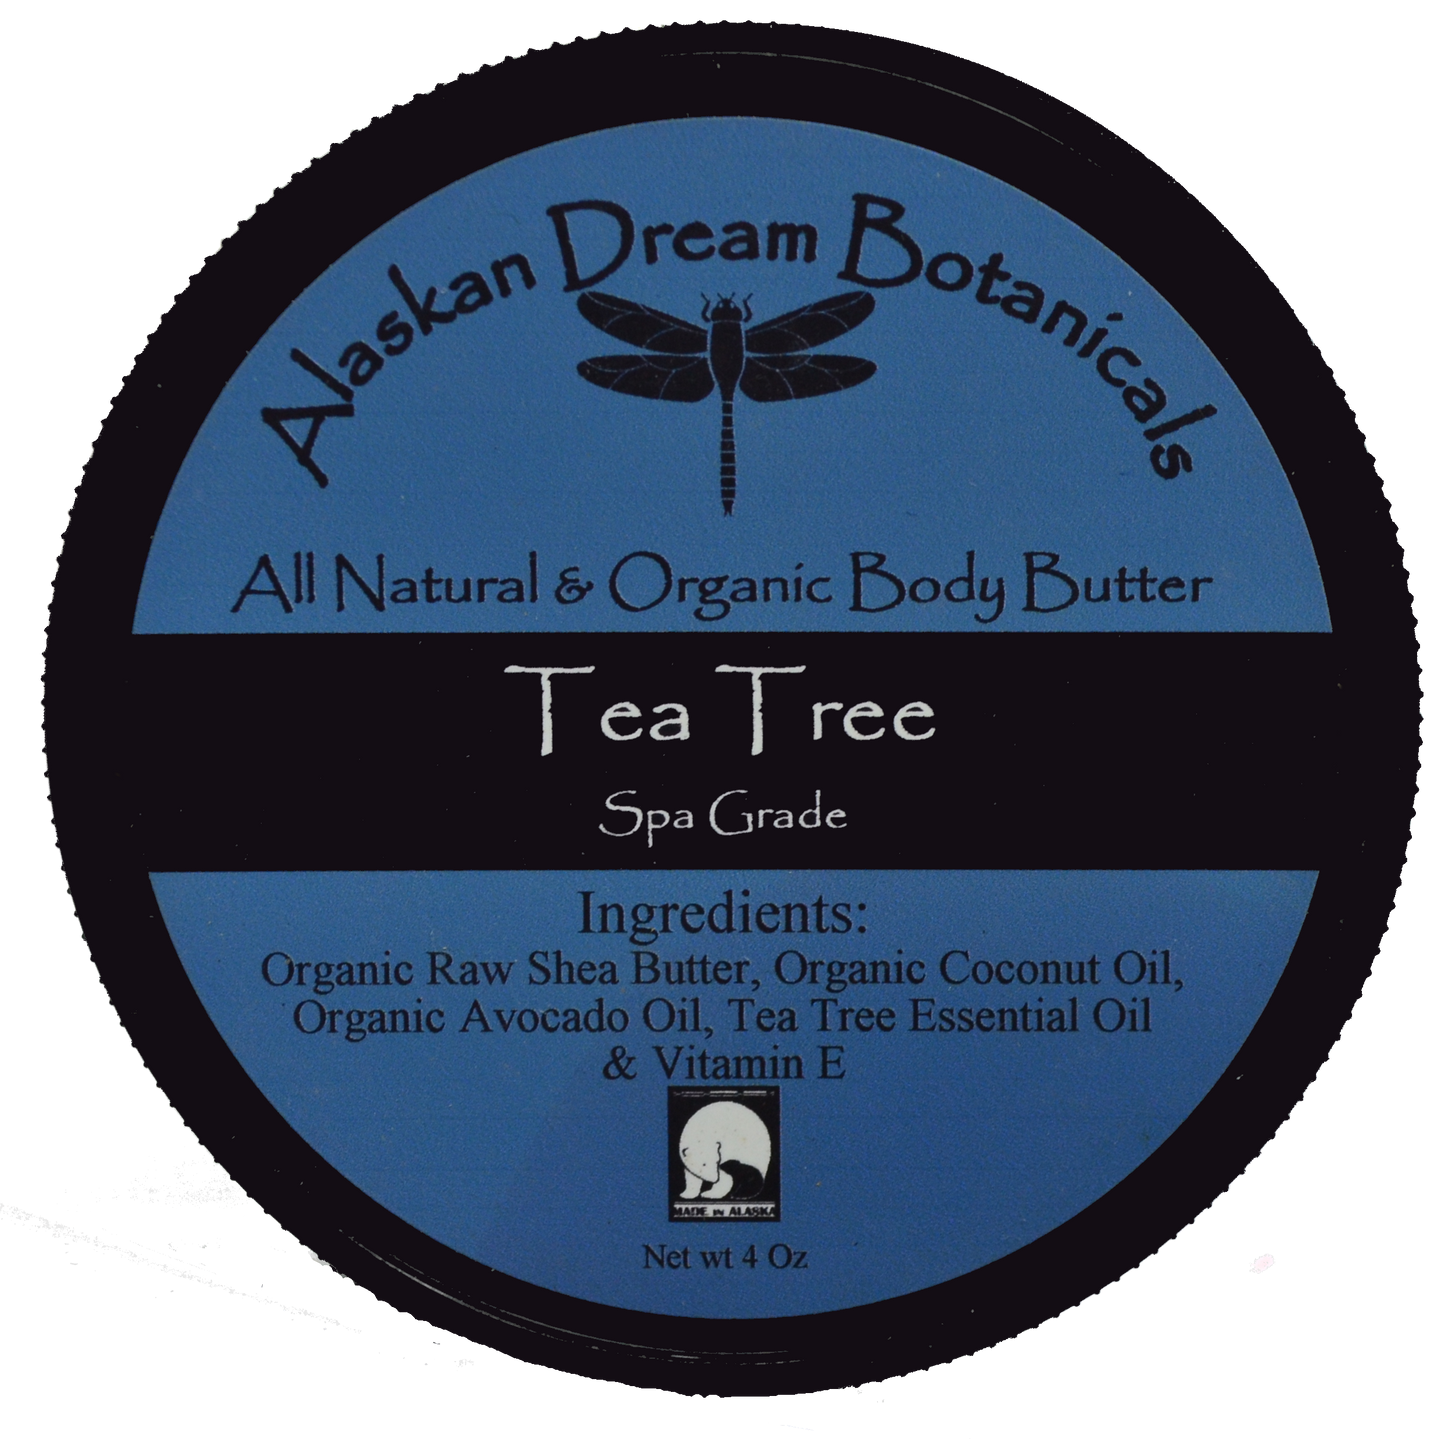 Tea Tree Antibacterial Spa Grade Body Butter - Alaskan Dream Botanicals